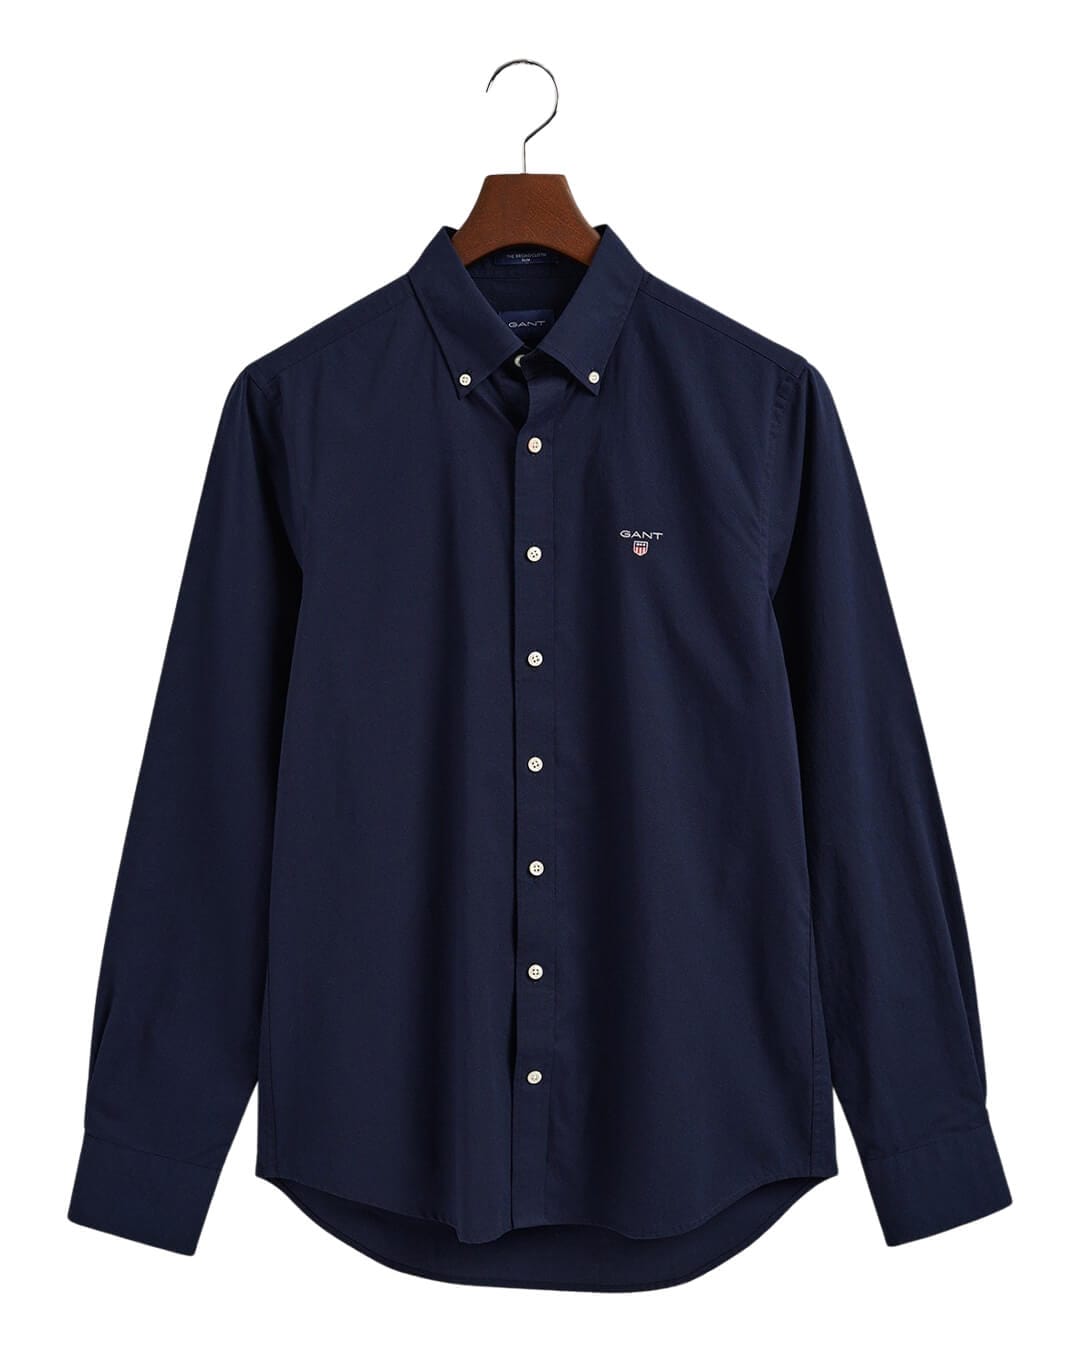 Gant Shirts Gant Navy Slim Fit Broadcloth Shirt